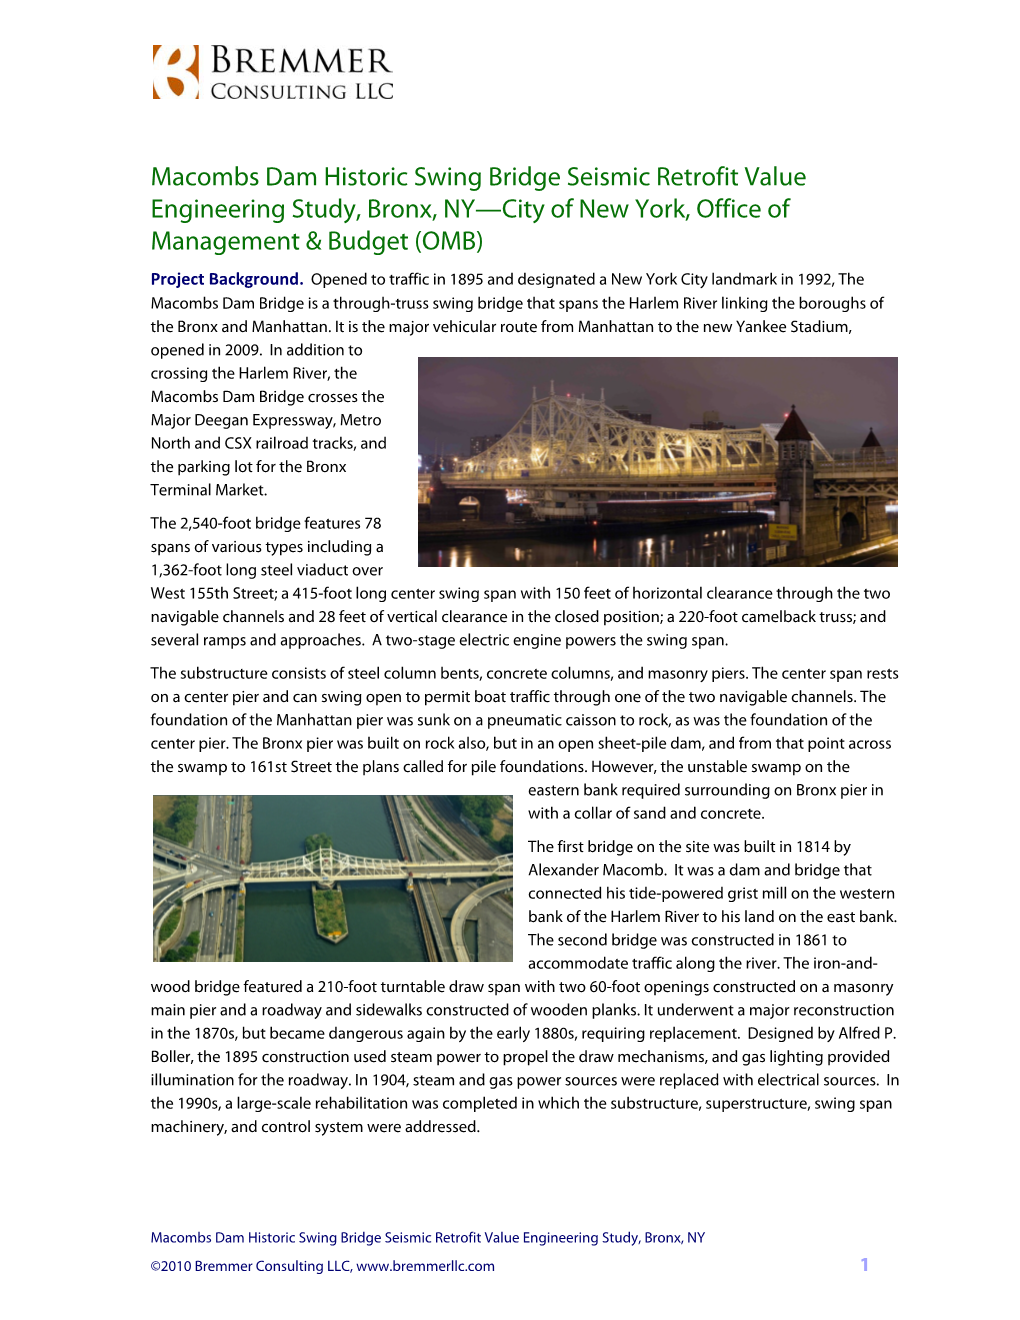 Macombs Dam Historic Swing Bridge Seismic Retrofit Value Engineering Study, Bronx, NY—City of New York, Office of Management & Budget (OMB) Project Background